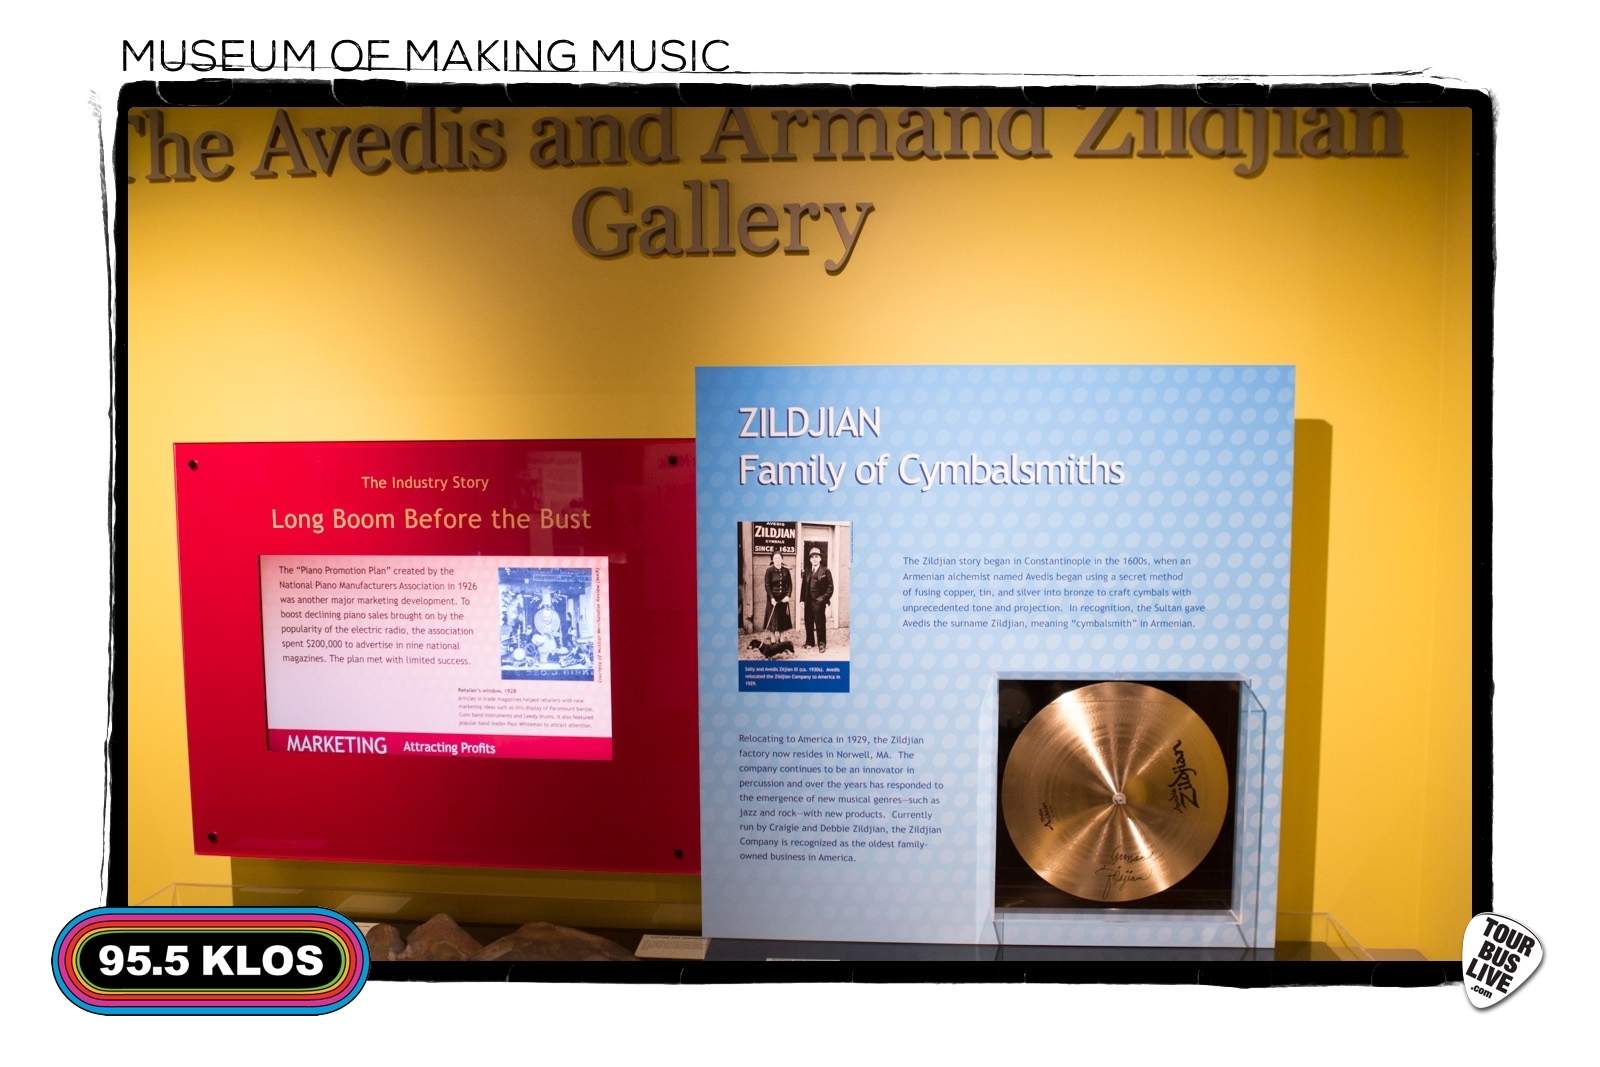 Museum of Making Music, Carlsbad, California. © 2017 TourBusLive.com